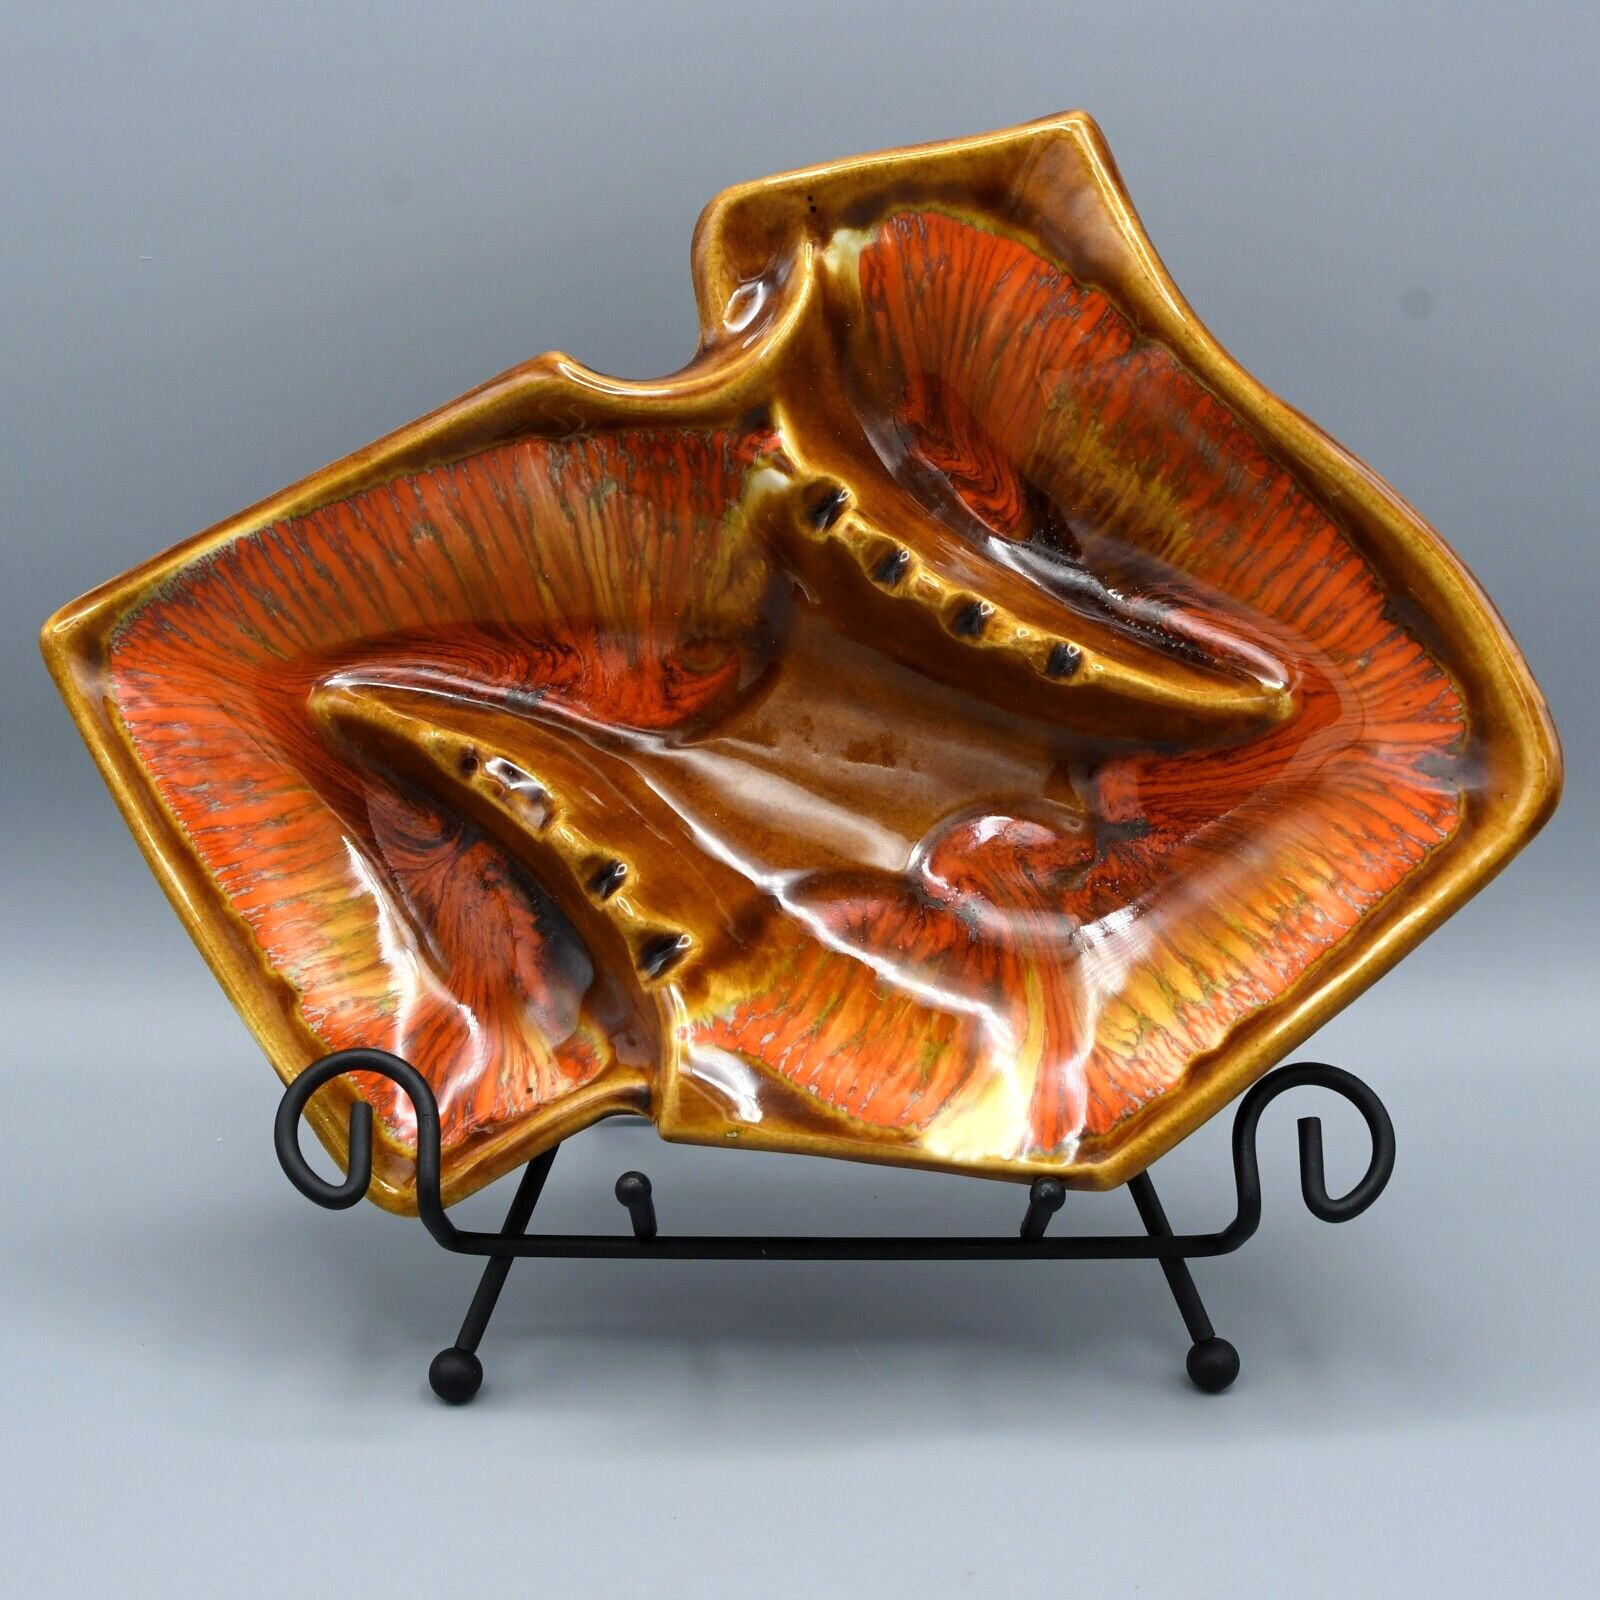 Vintage Ceramic Ashtray Maurice of California 1M 93 MCM Orange Brown